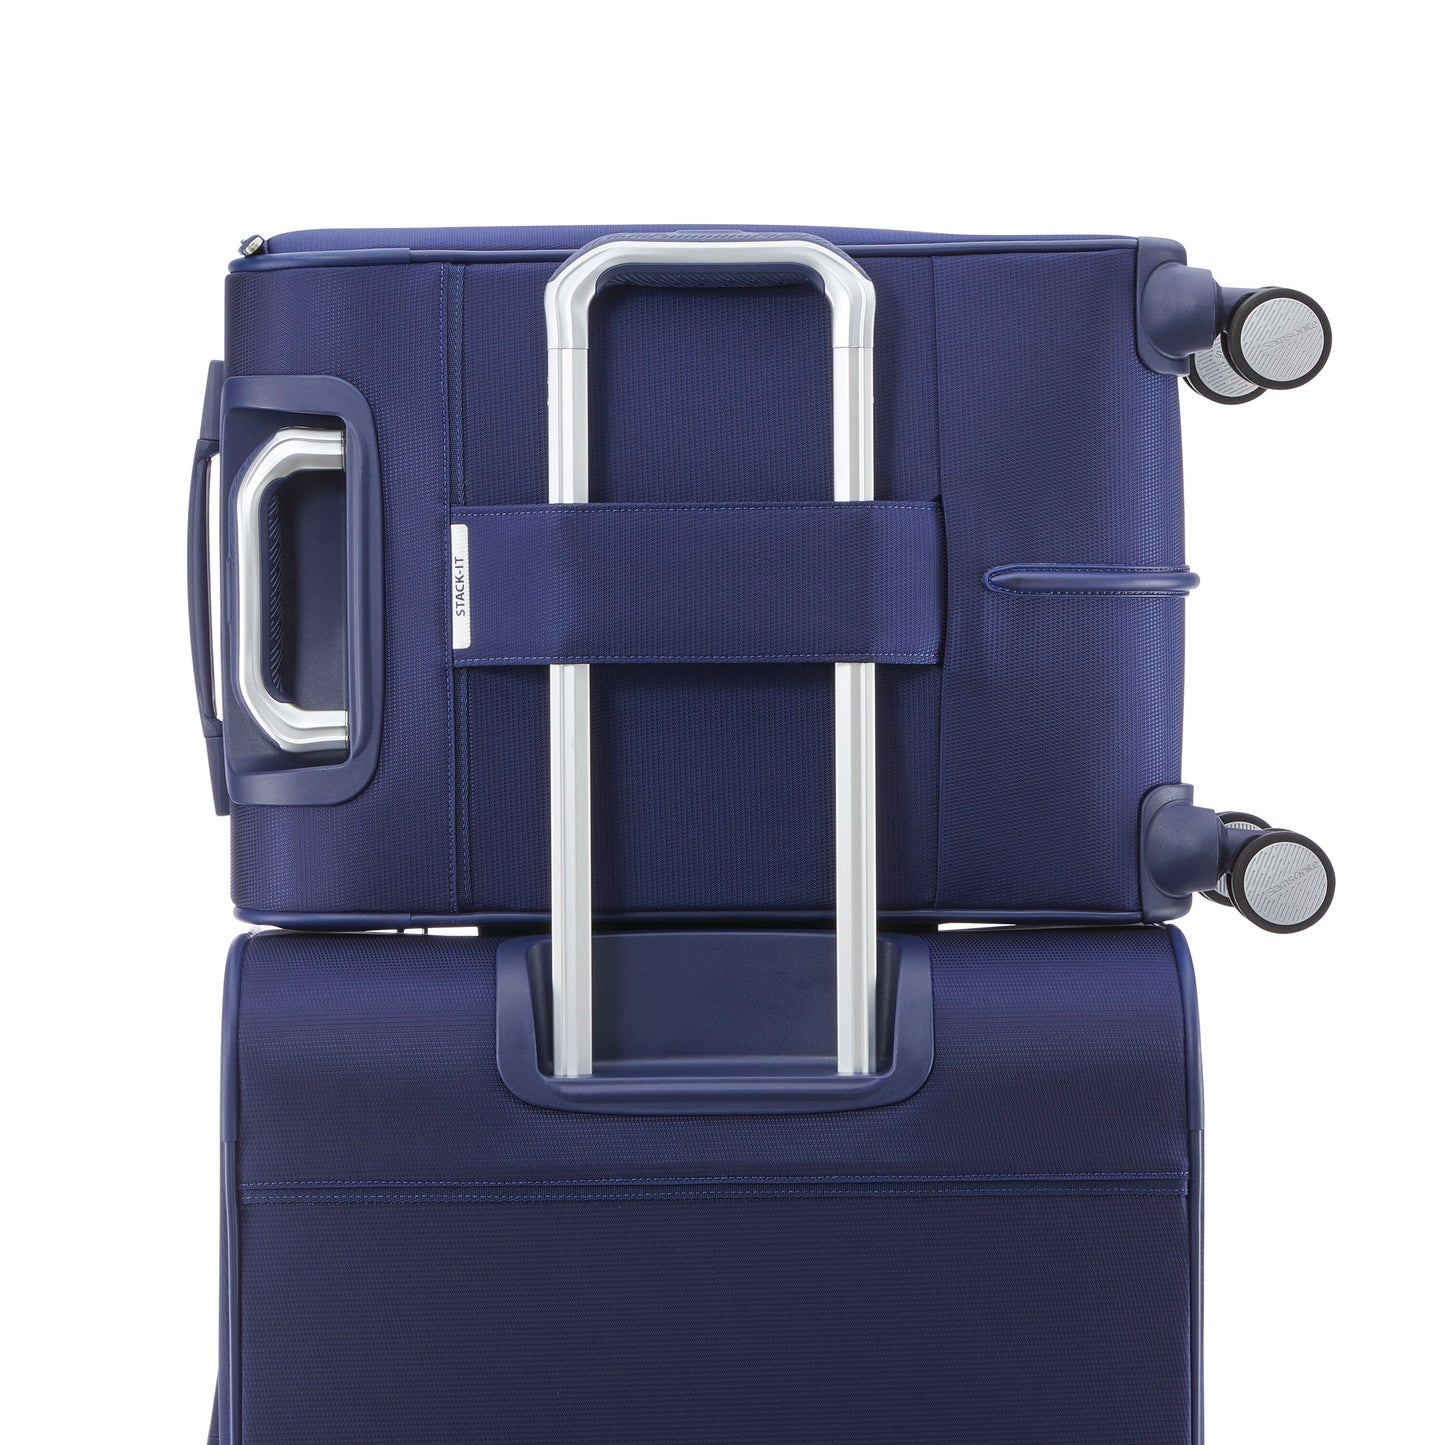 Samsonite Ascentra Spinner Suitcases